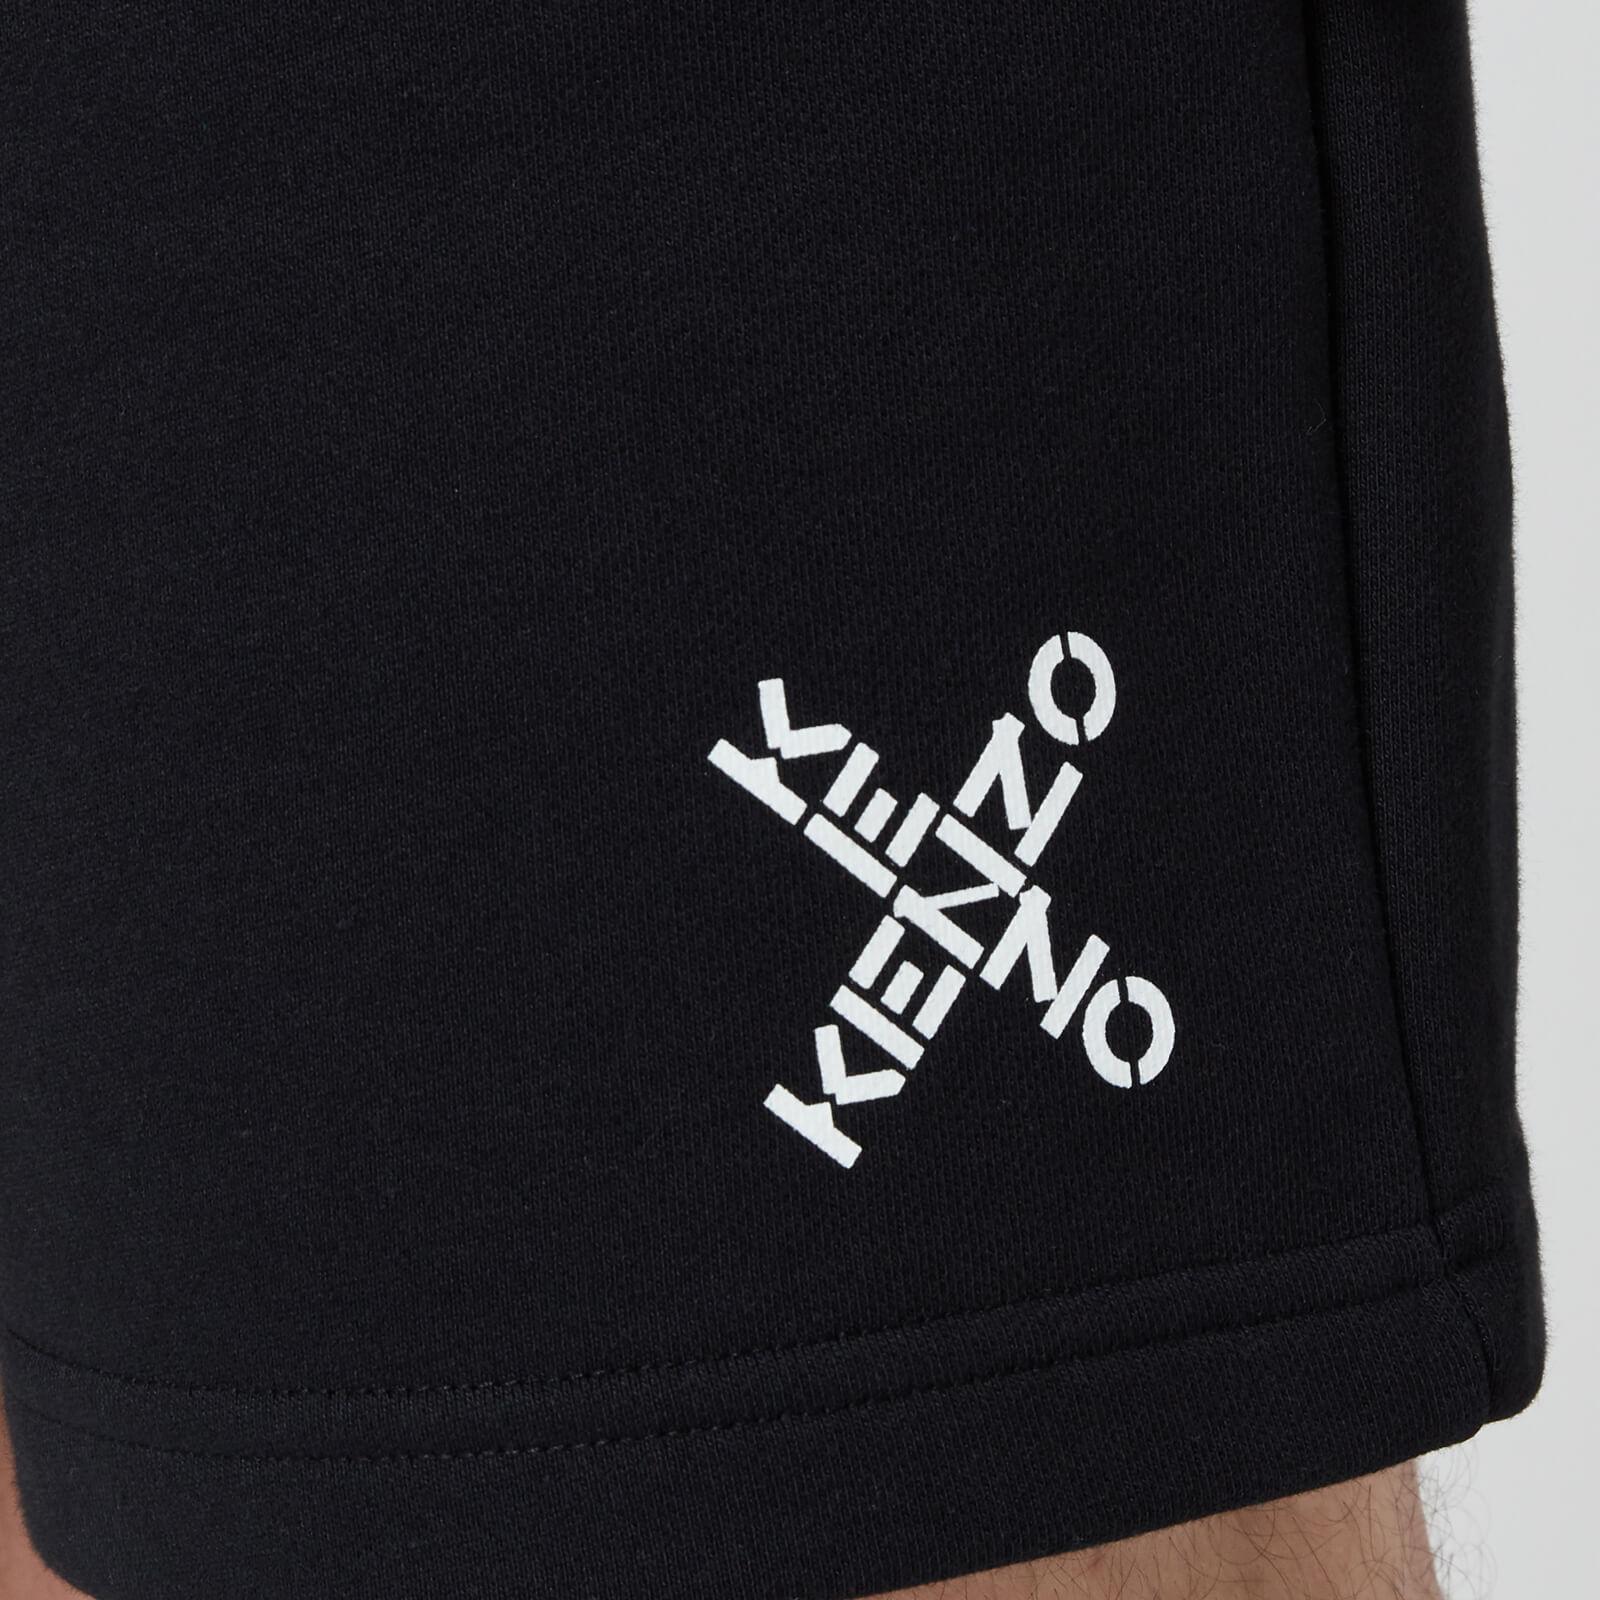 KENZO Sport Classic Shorts in Black for Men - Lyst